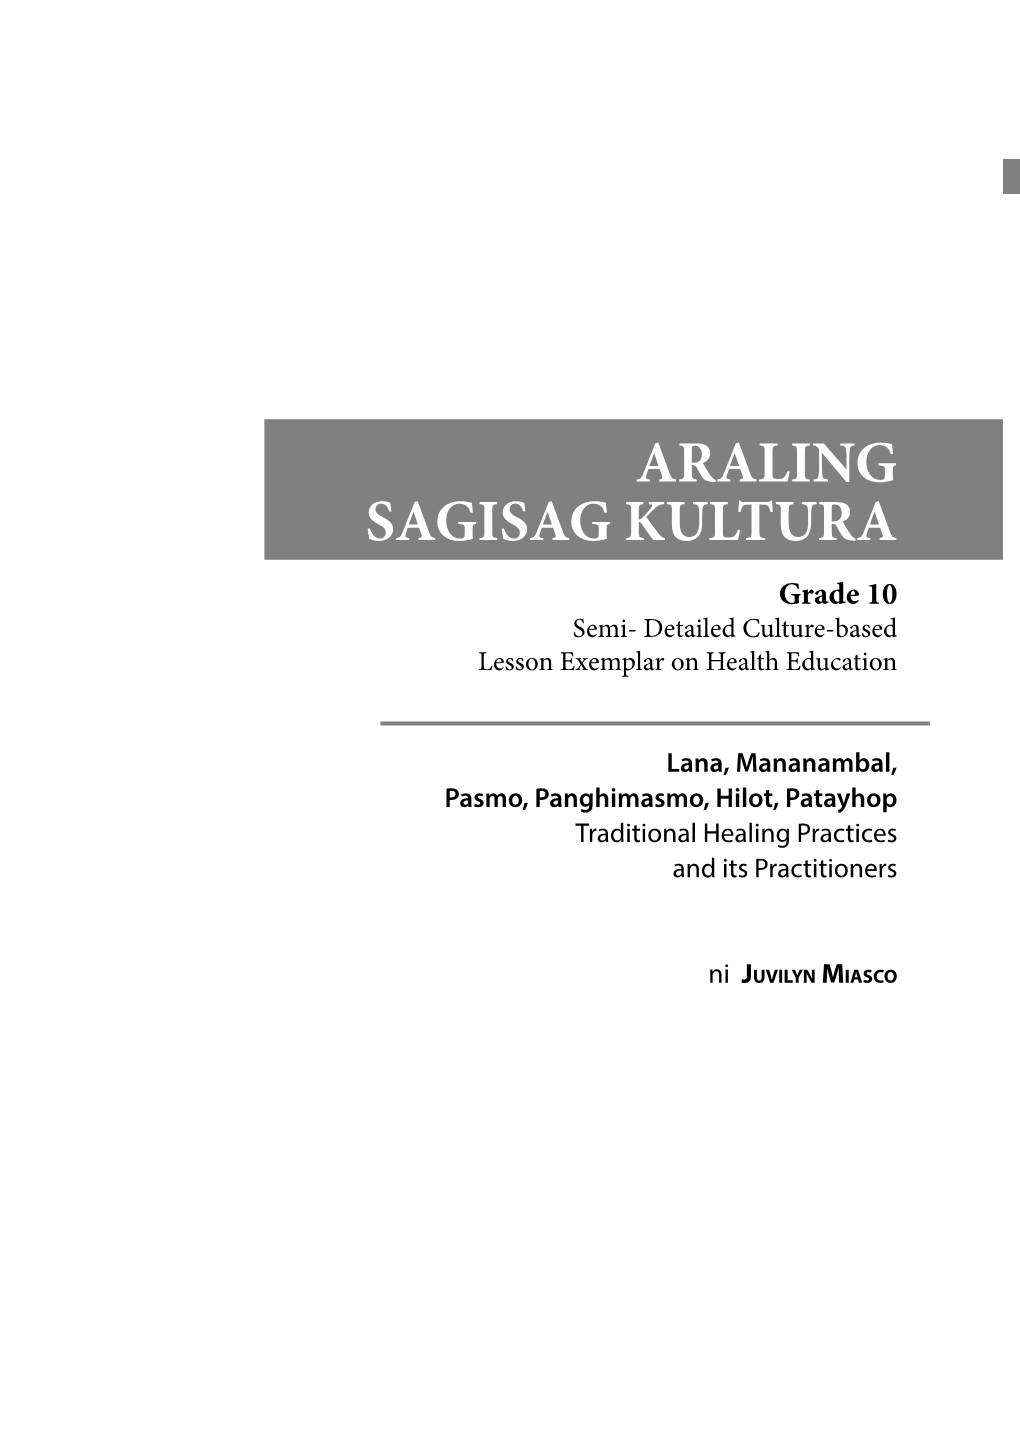 Revised Araling Sagisag Kultura Oct 27.Indd